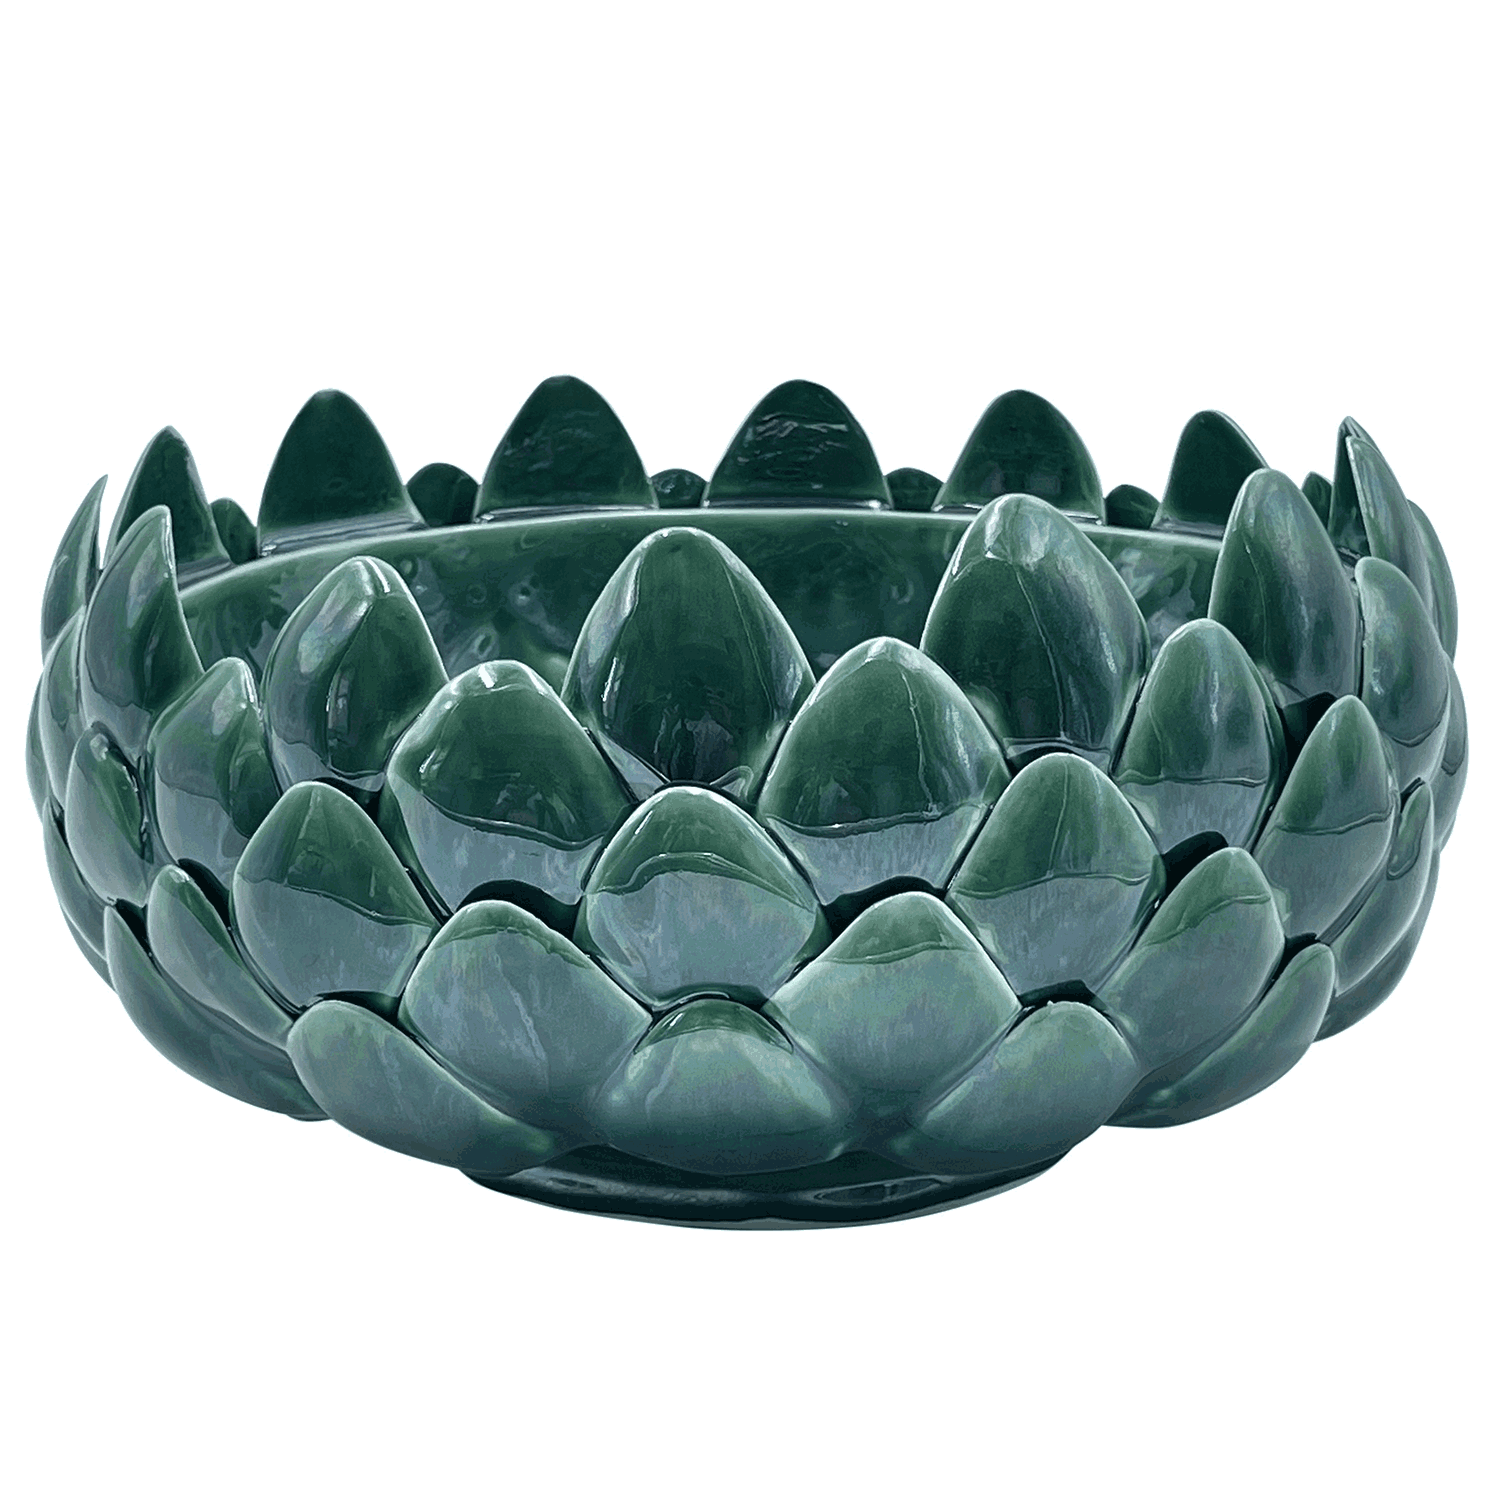 Extra Large Green Artichoke Bowl